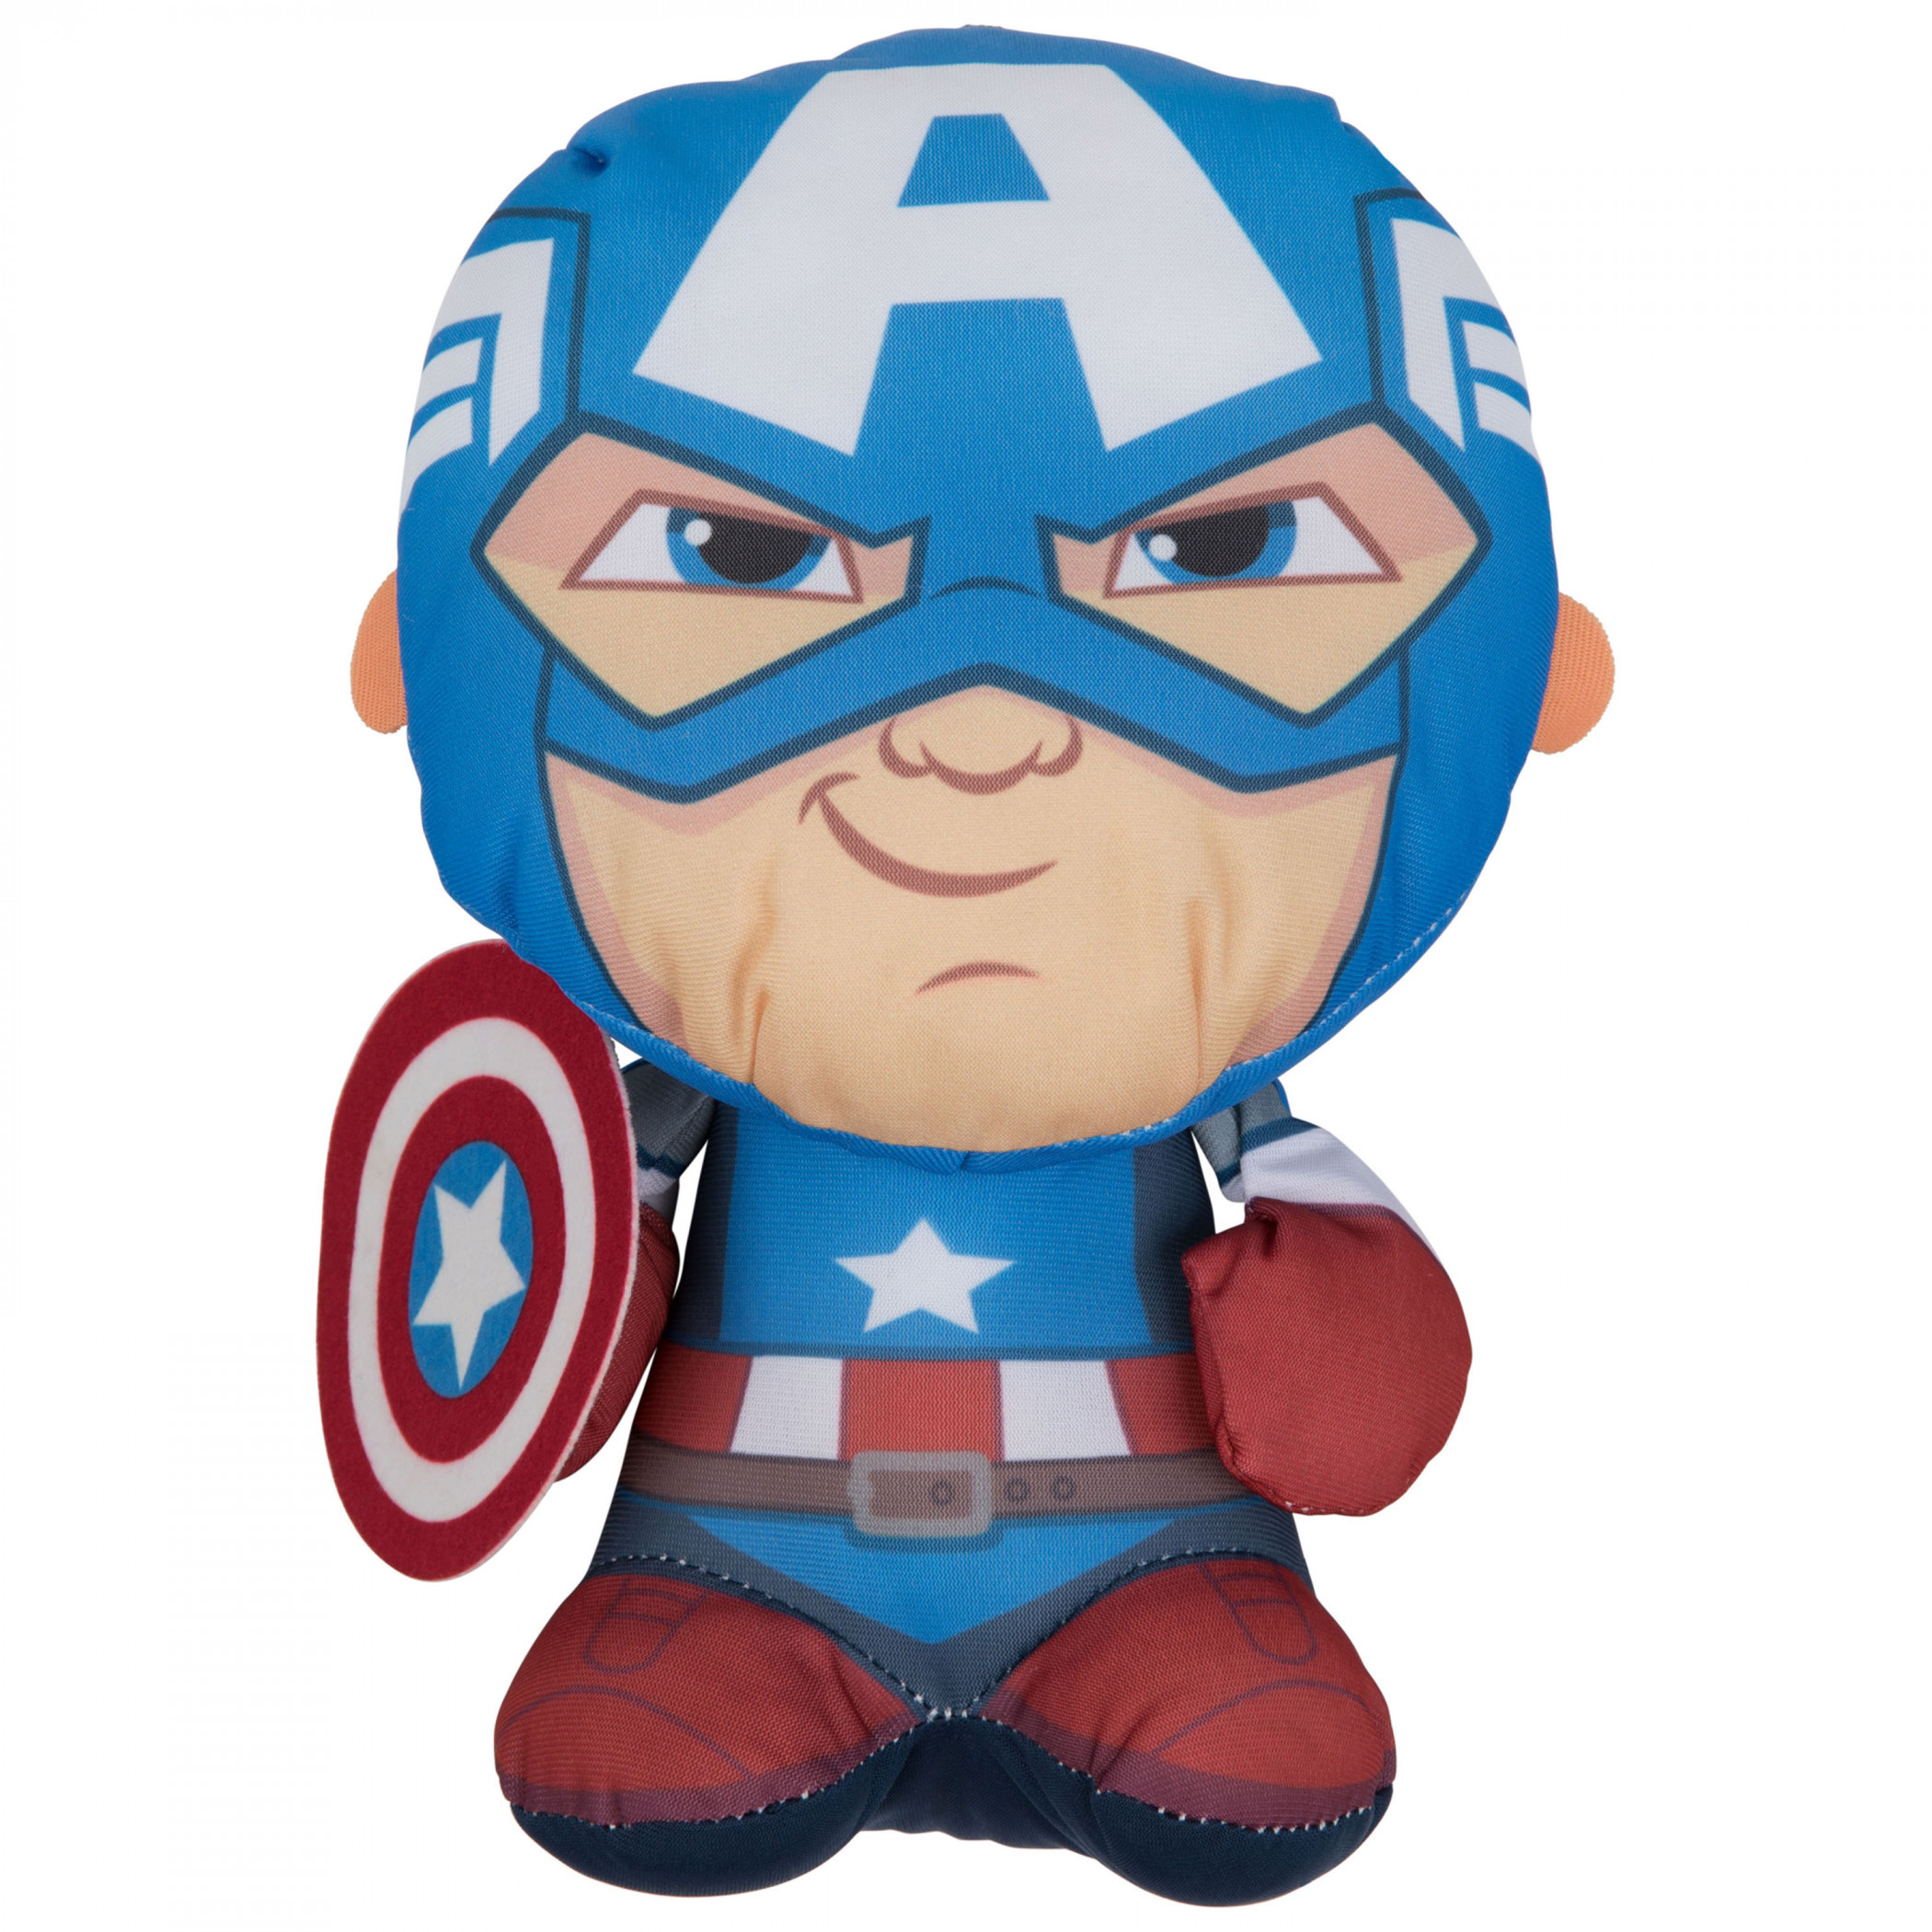 Captain America 11" Mash'ems Plush Toy